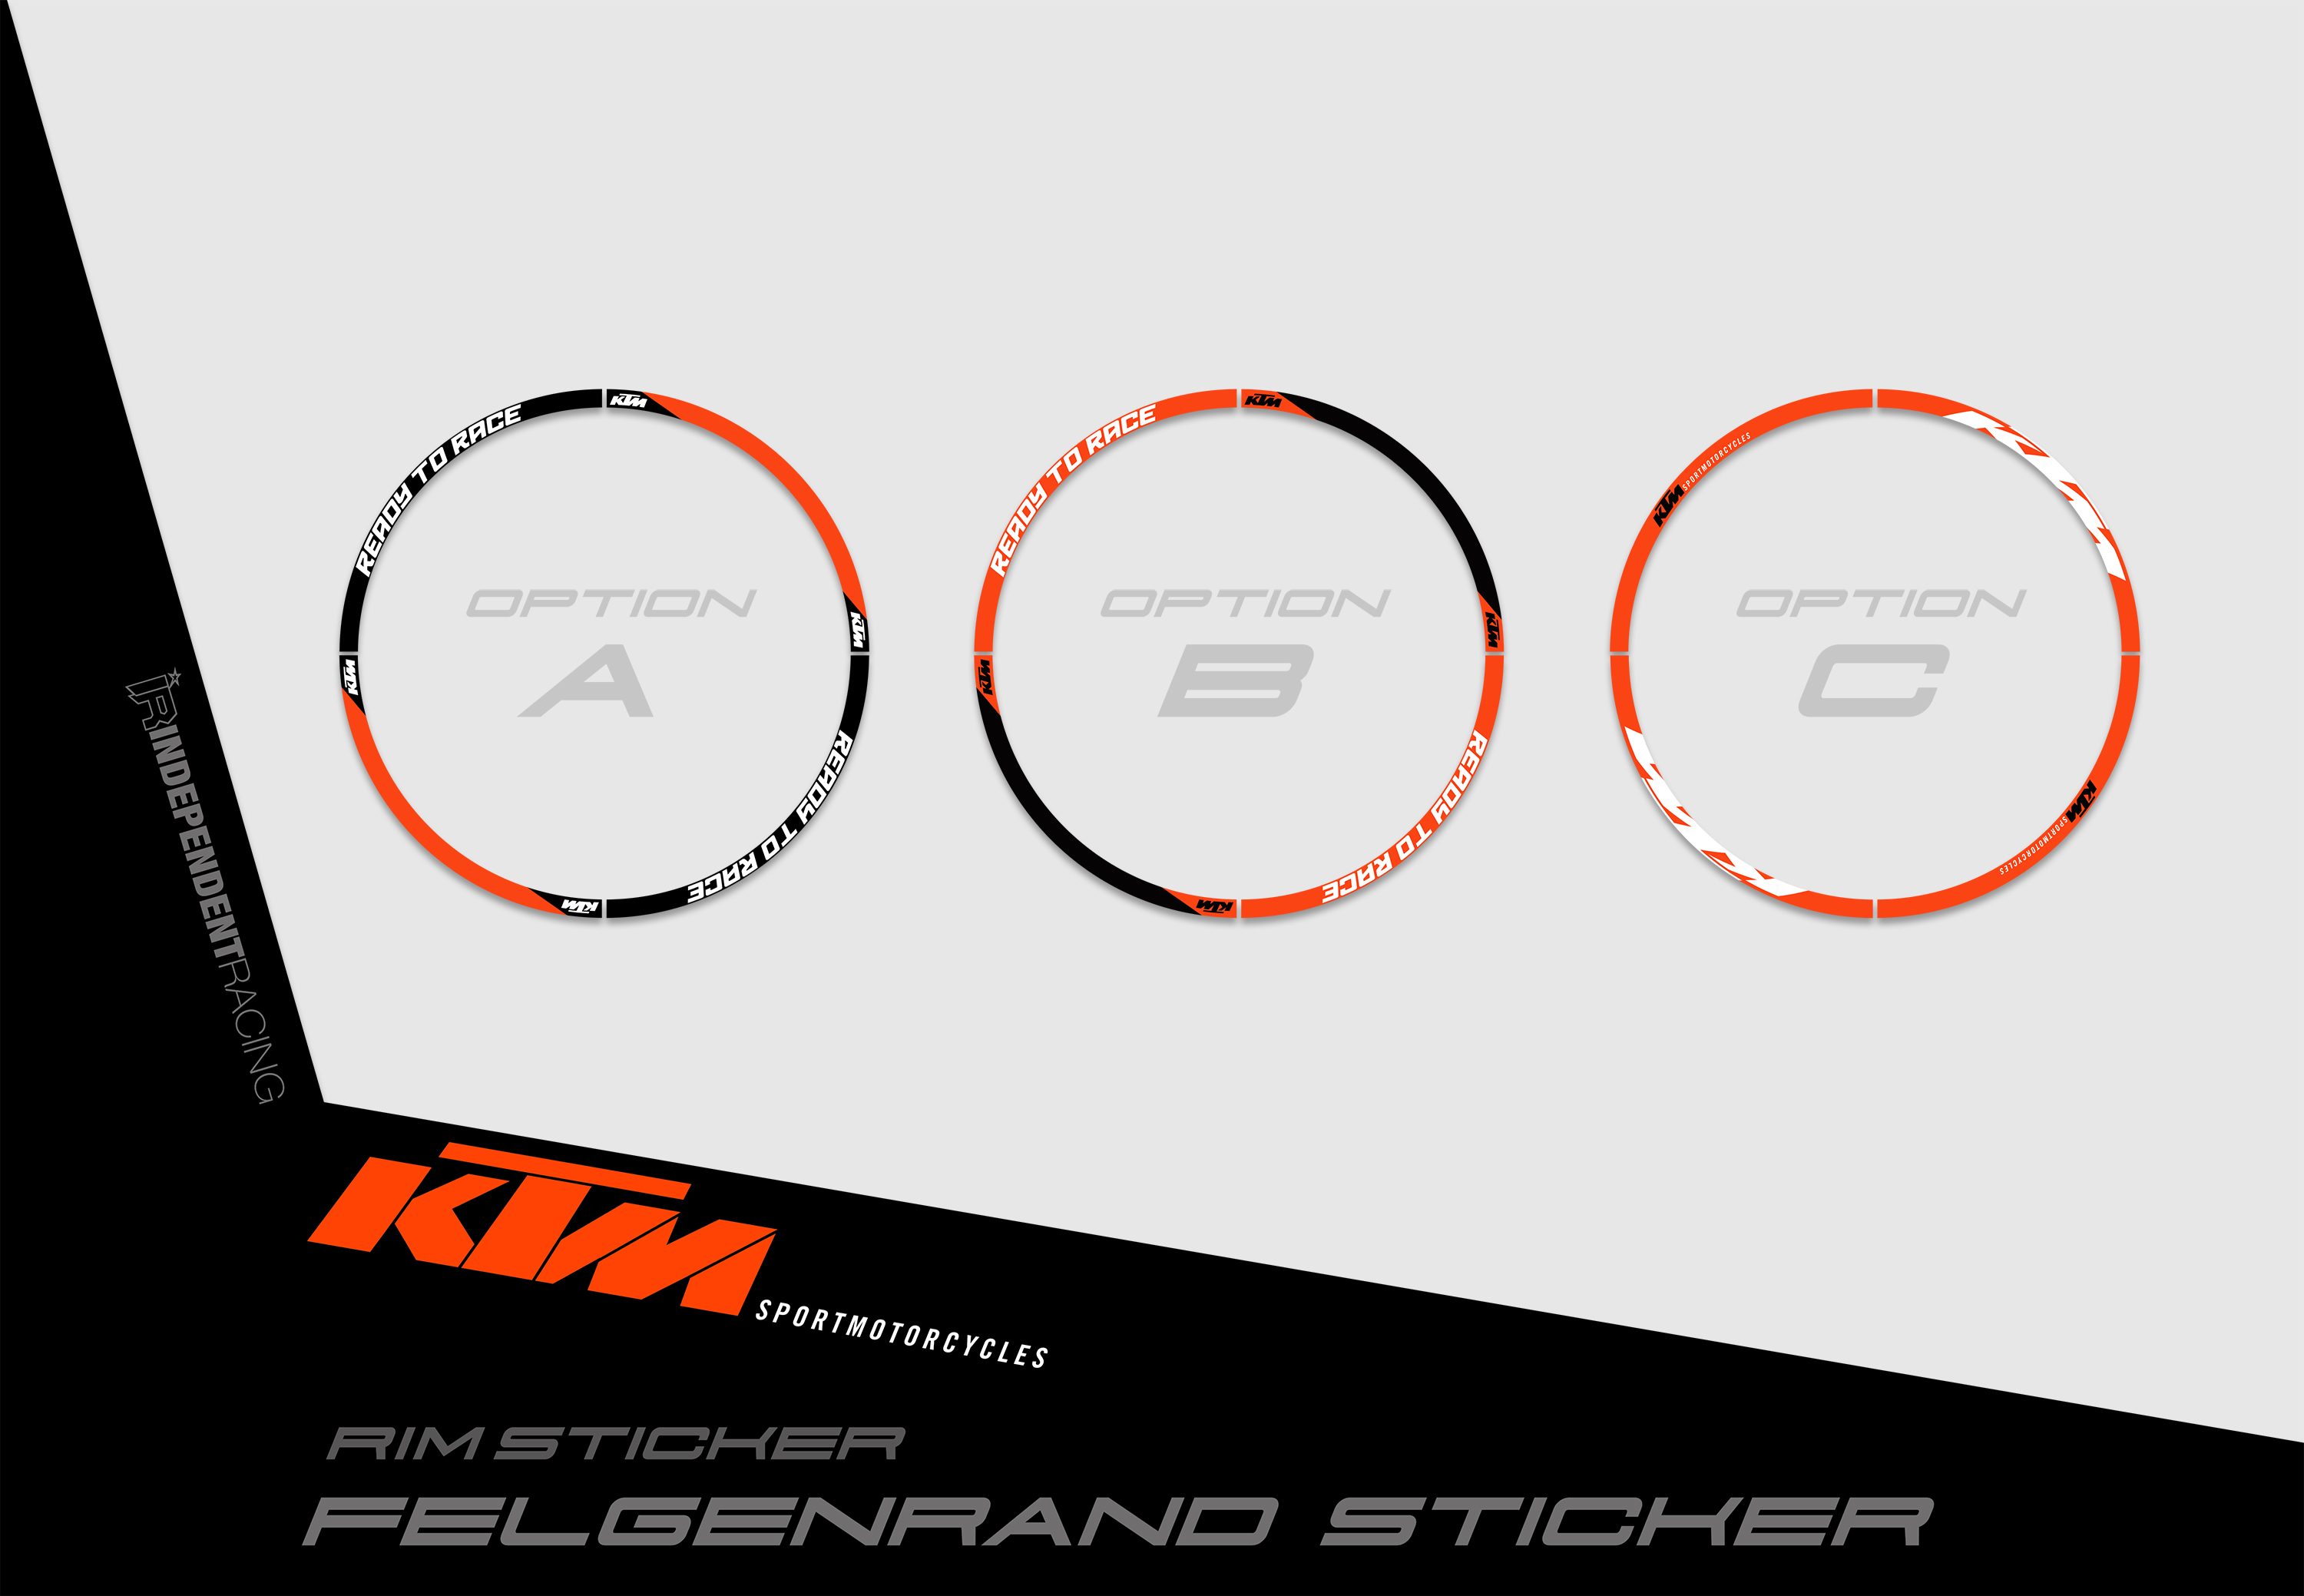 KTM Lc4 2005 - 2007, Dekor Factory 2A